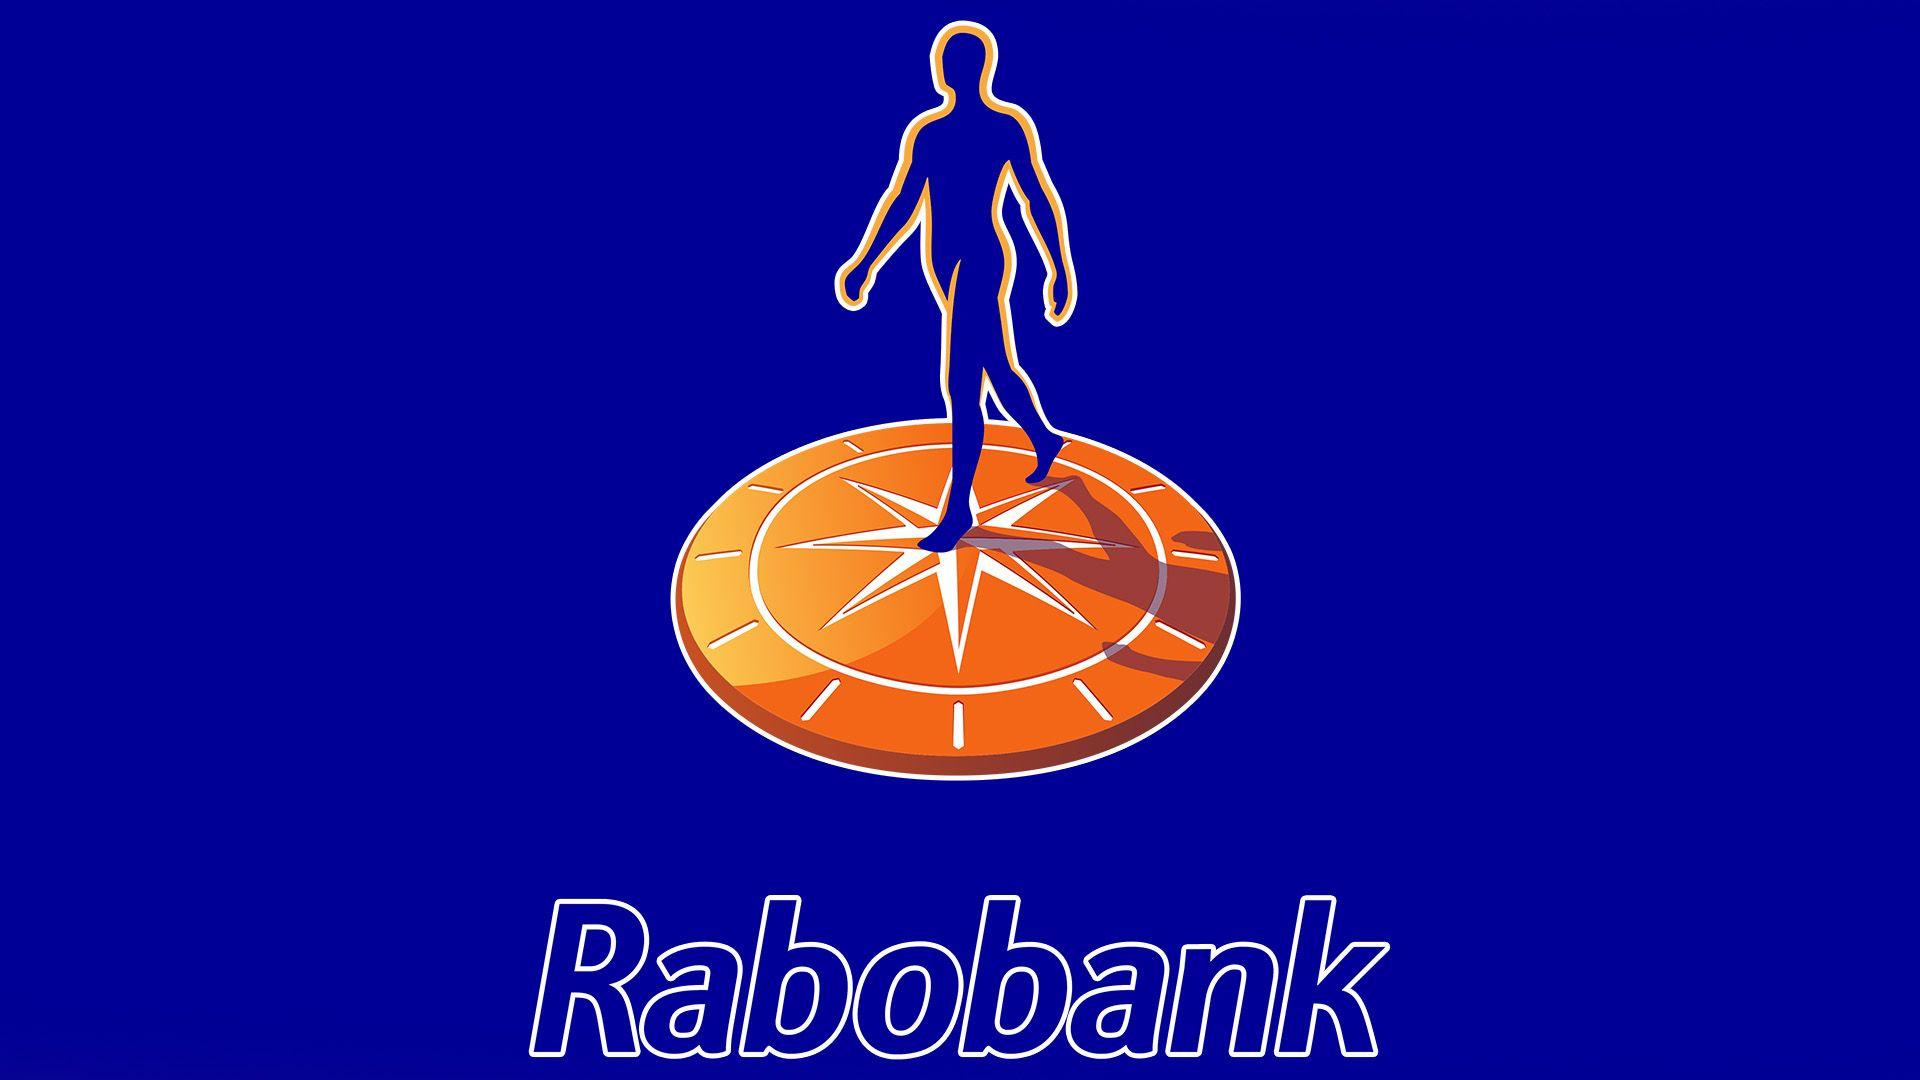 Rabobank Logo - Meaning Rabobank logo and symbol. history and evolution